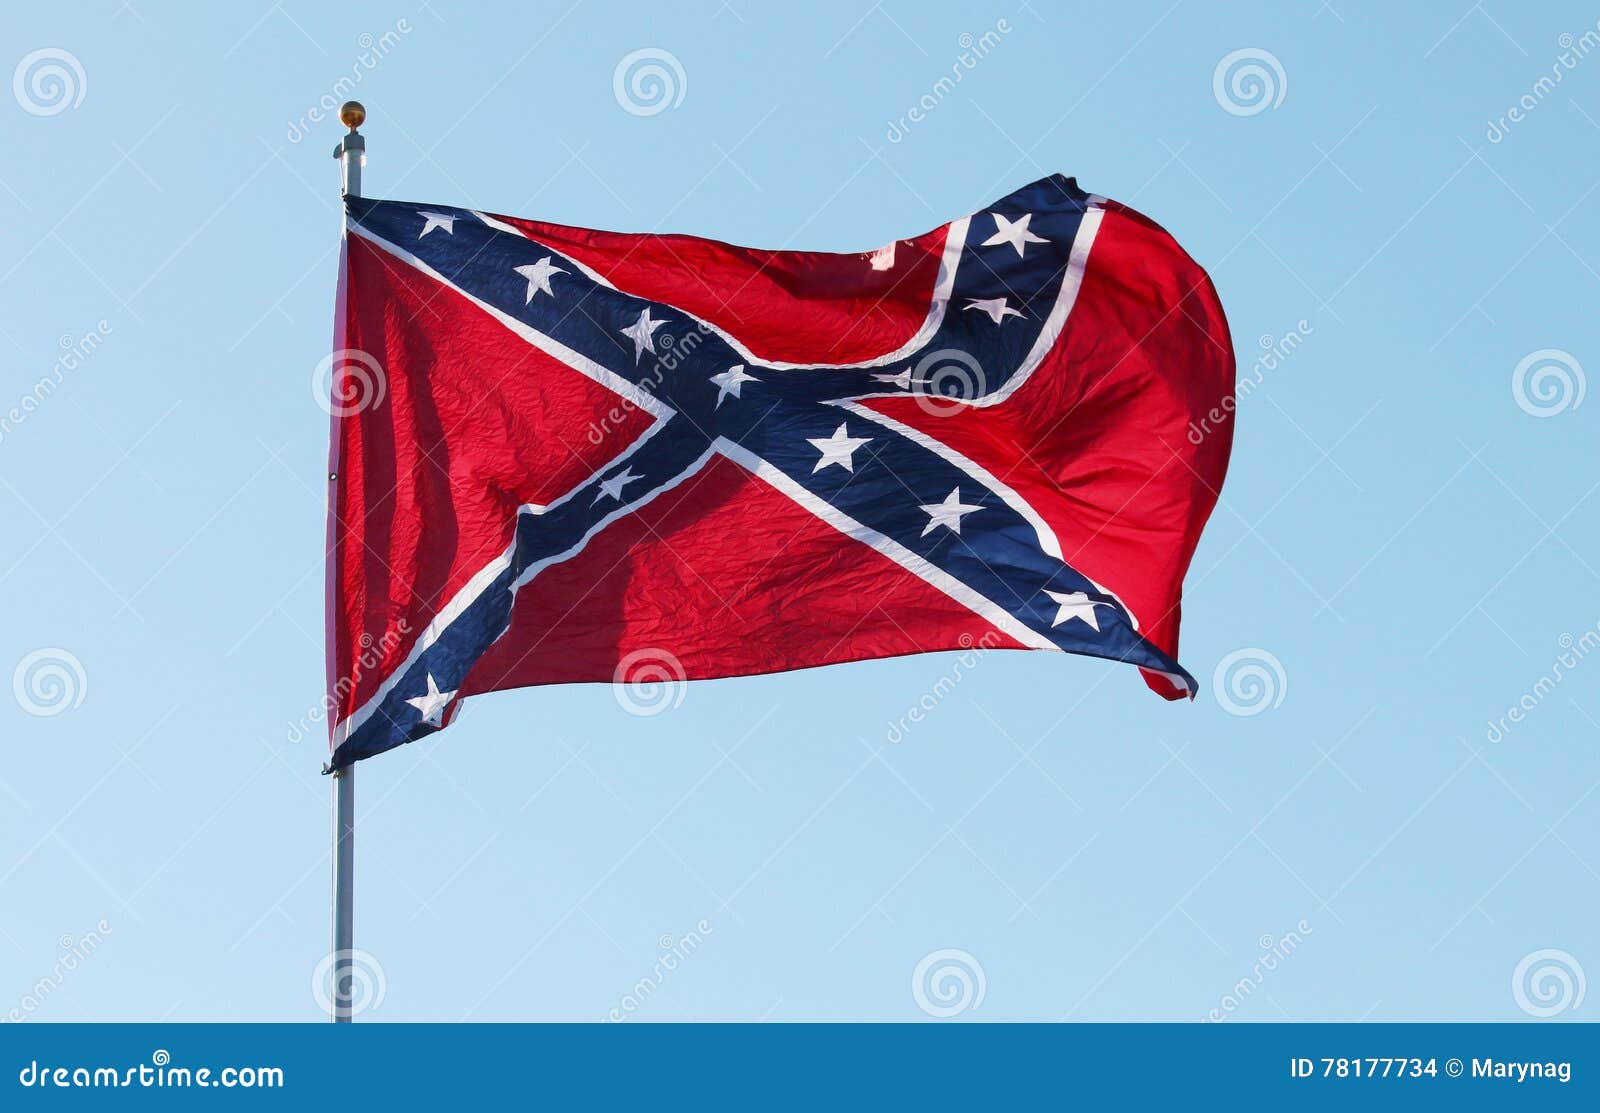 confederate rebel flag